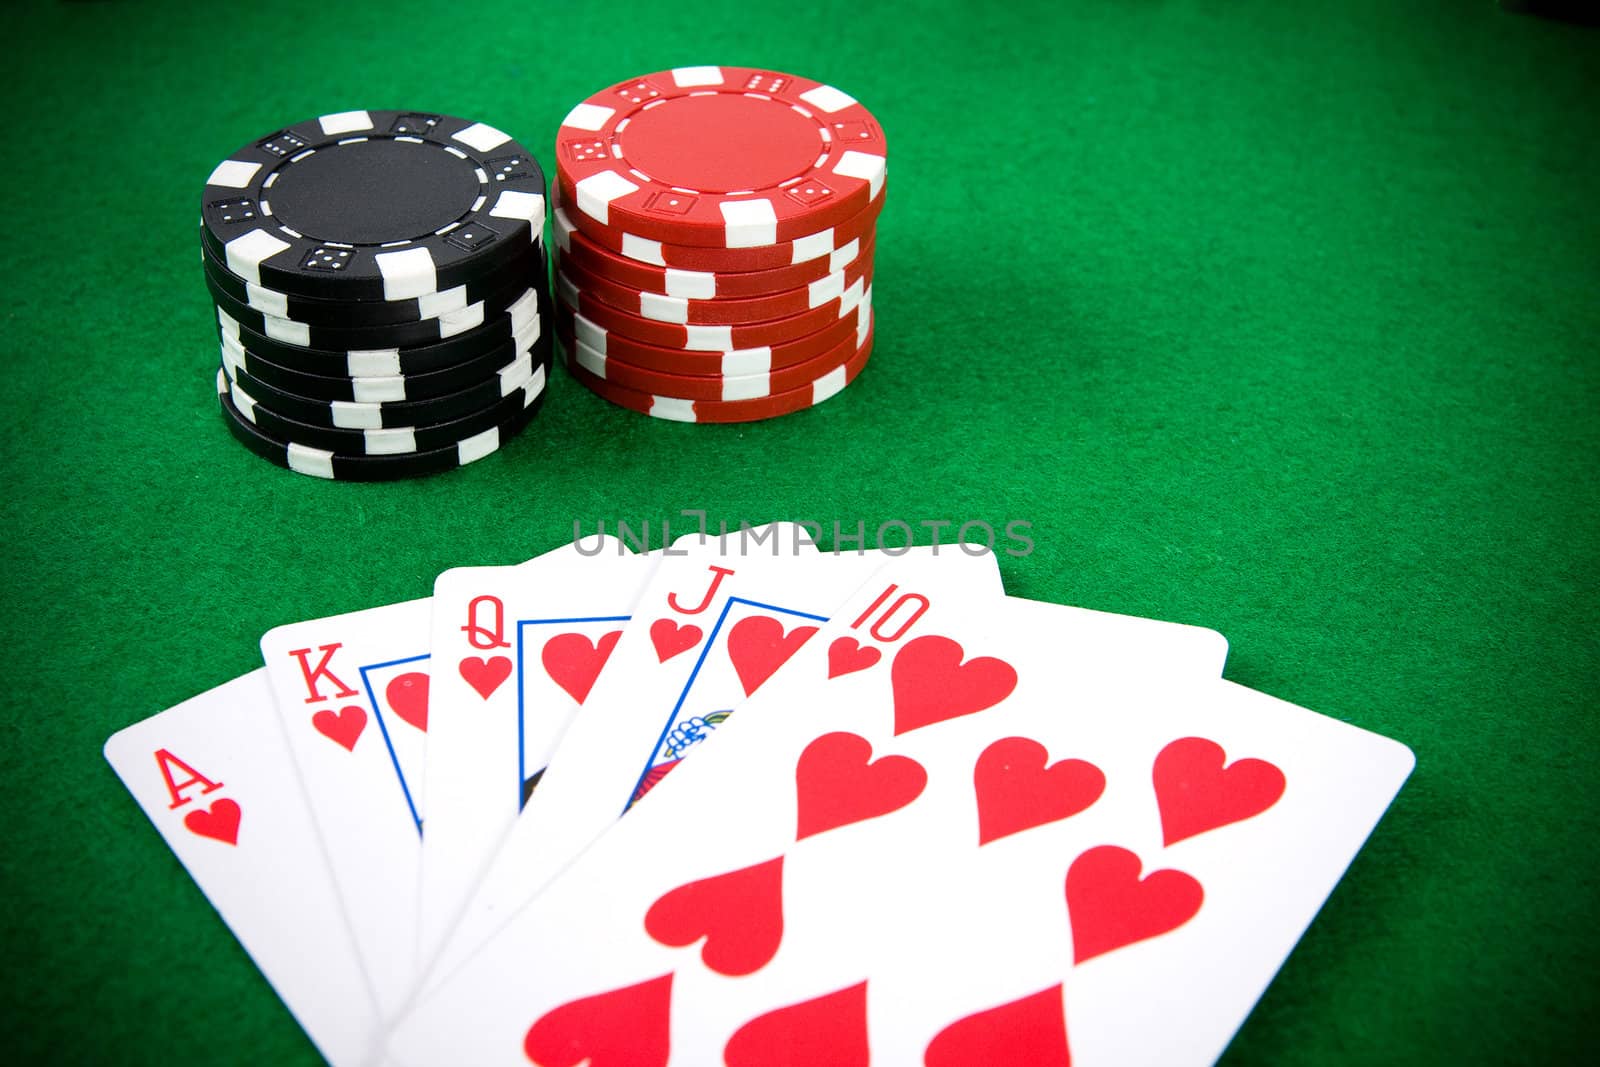 Poker arrangement with poker chips on green poker table.